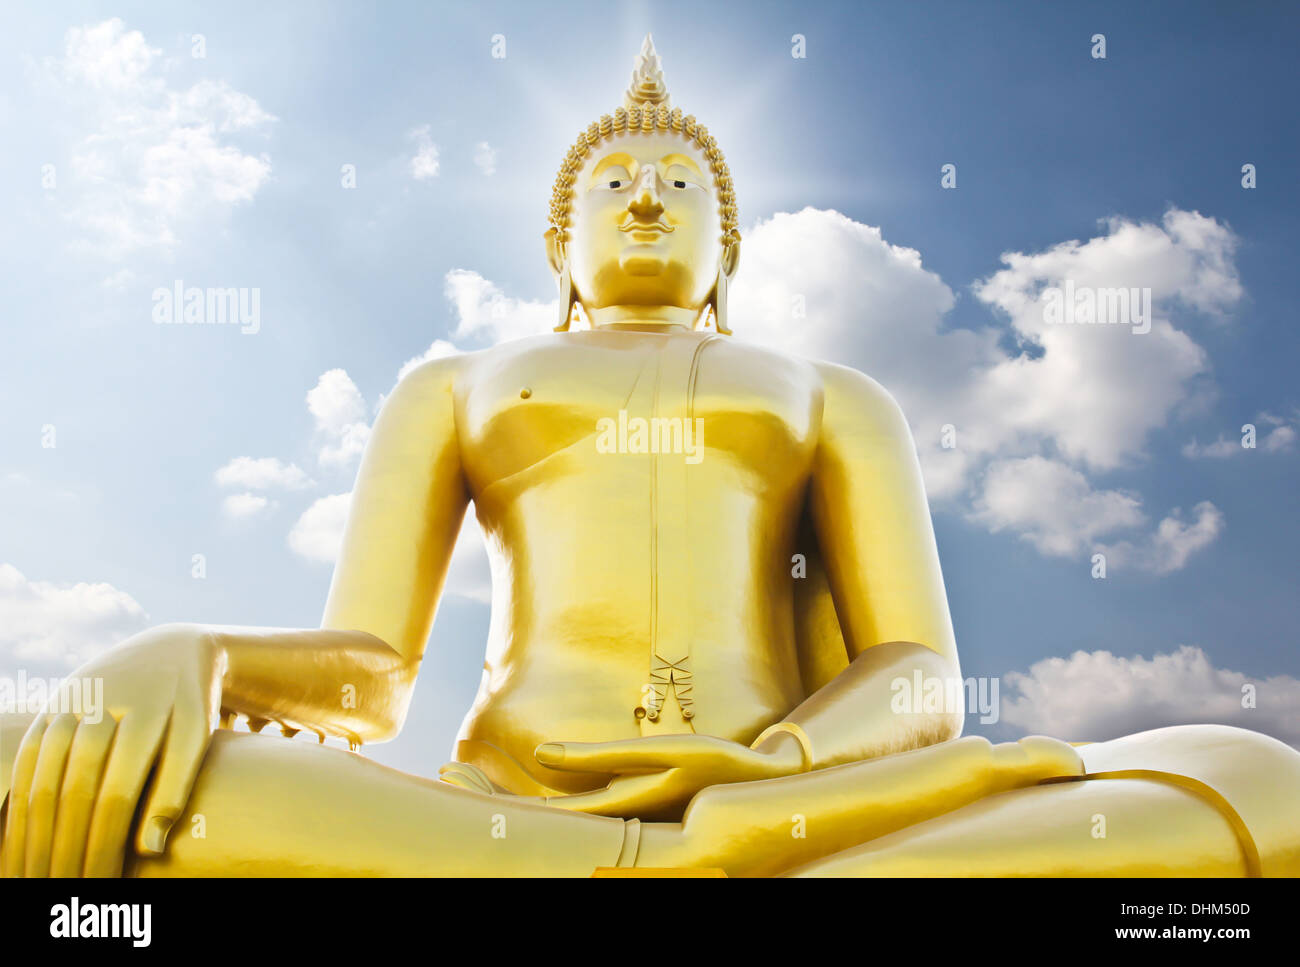 Big golden buddha statue against sky Stock Photo